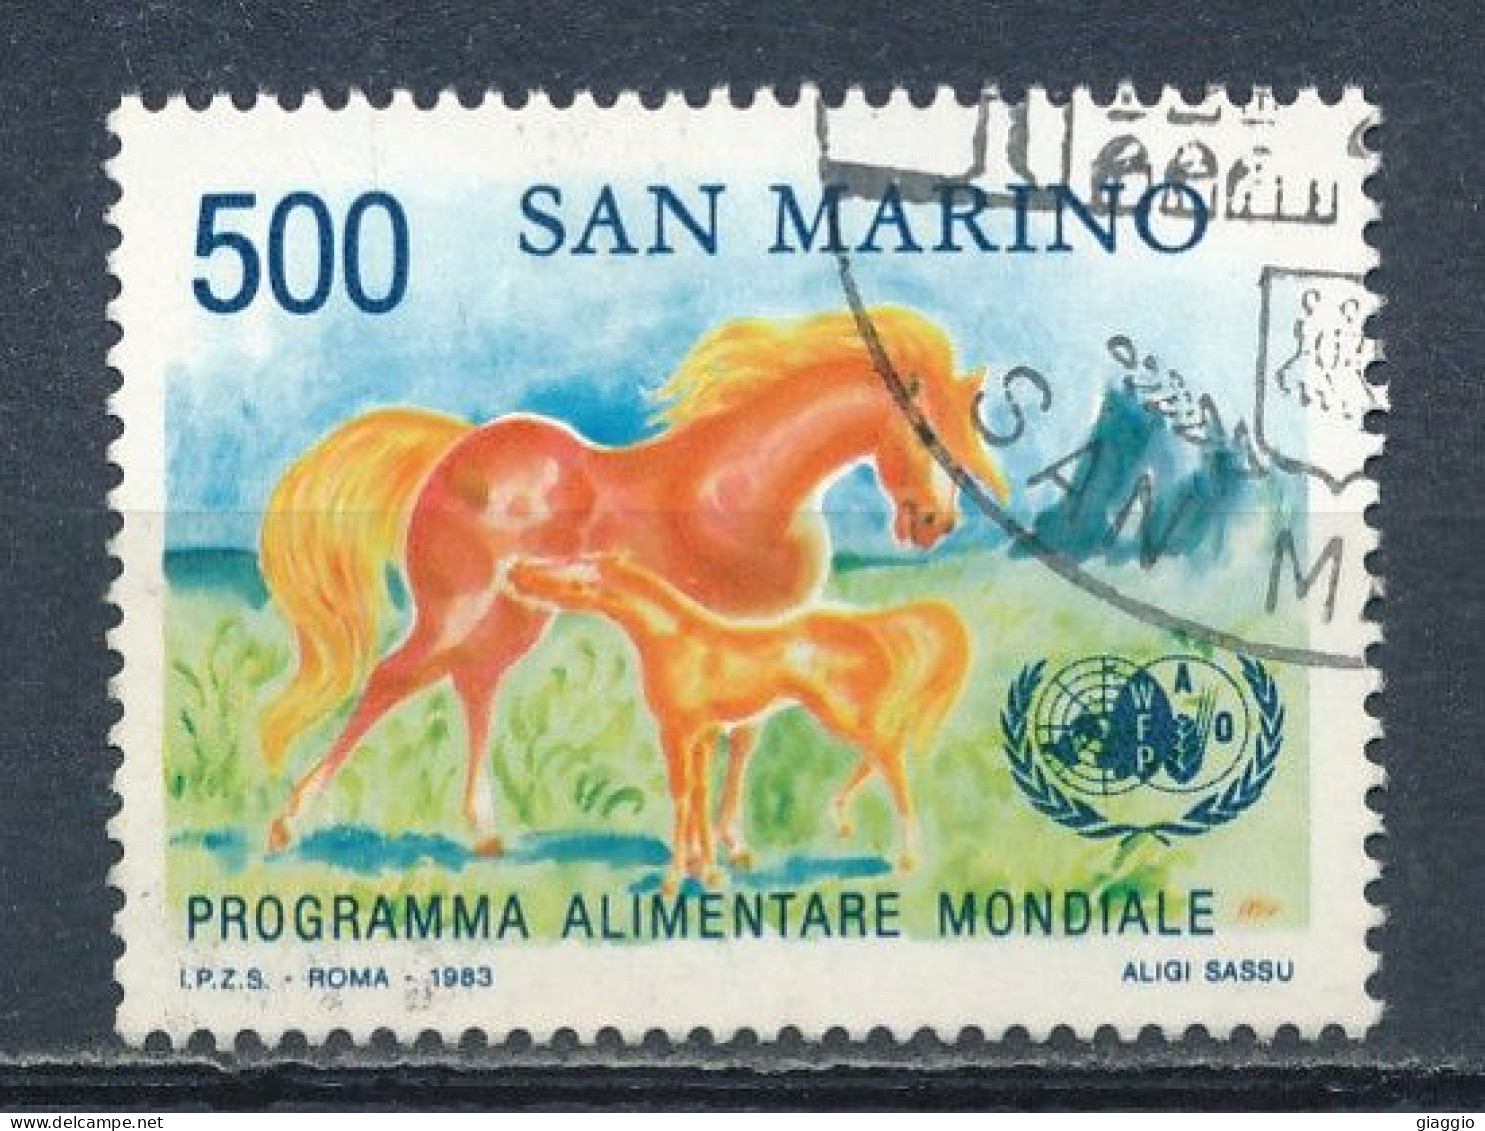 °°° SAN MARINO - Y&T N°1083 - 1983 °°° - Used Stamps